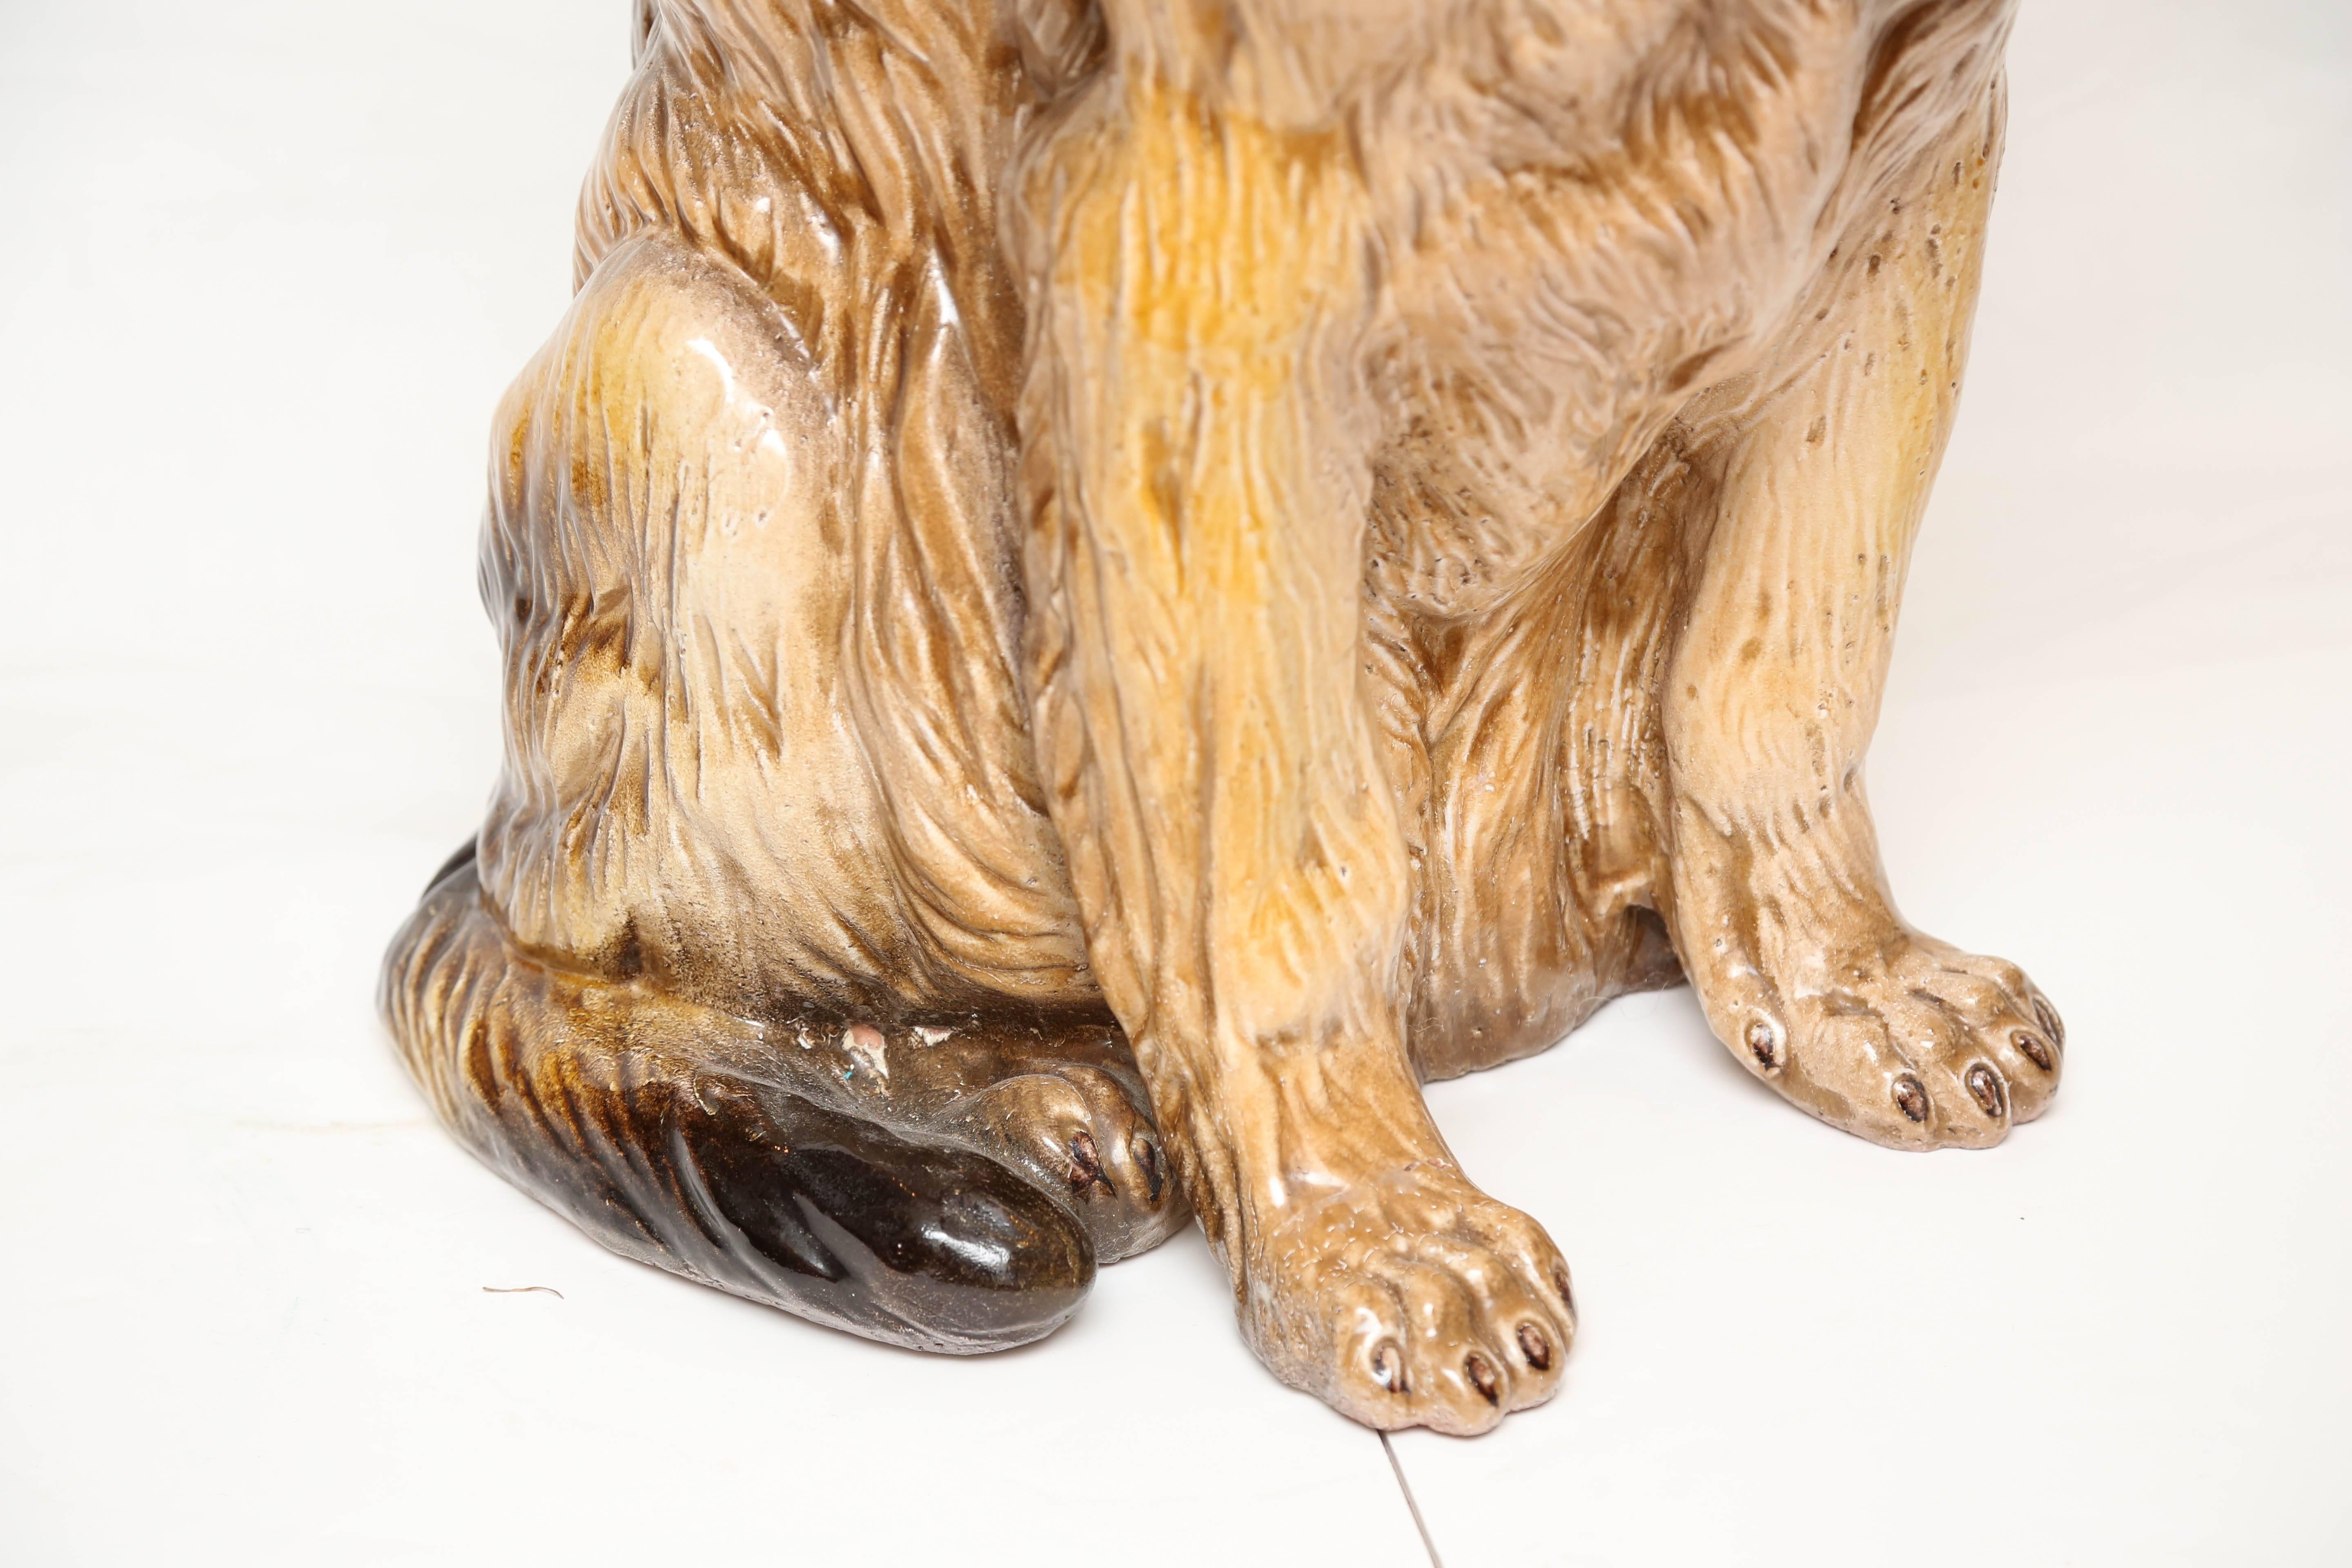 Terra Cotta Lifesize German Shepherd Dog Sculpture 3